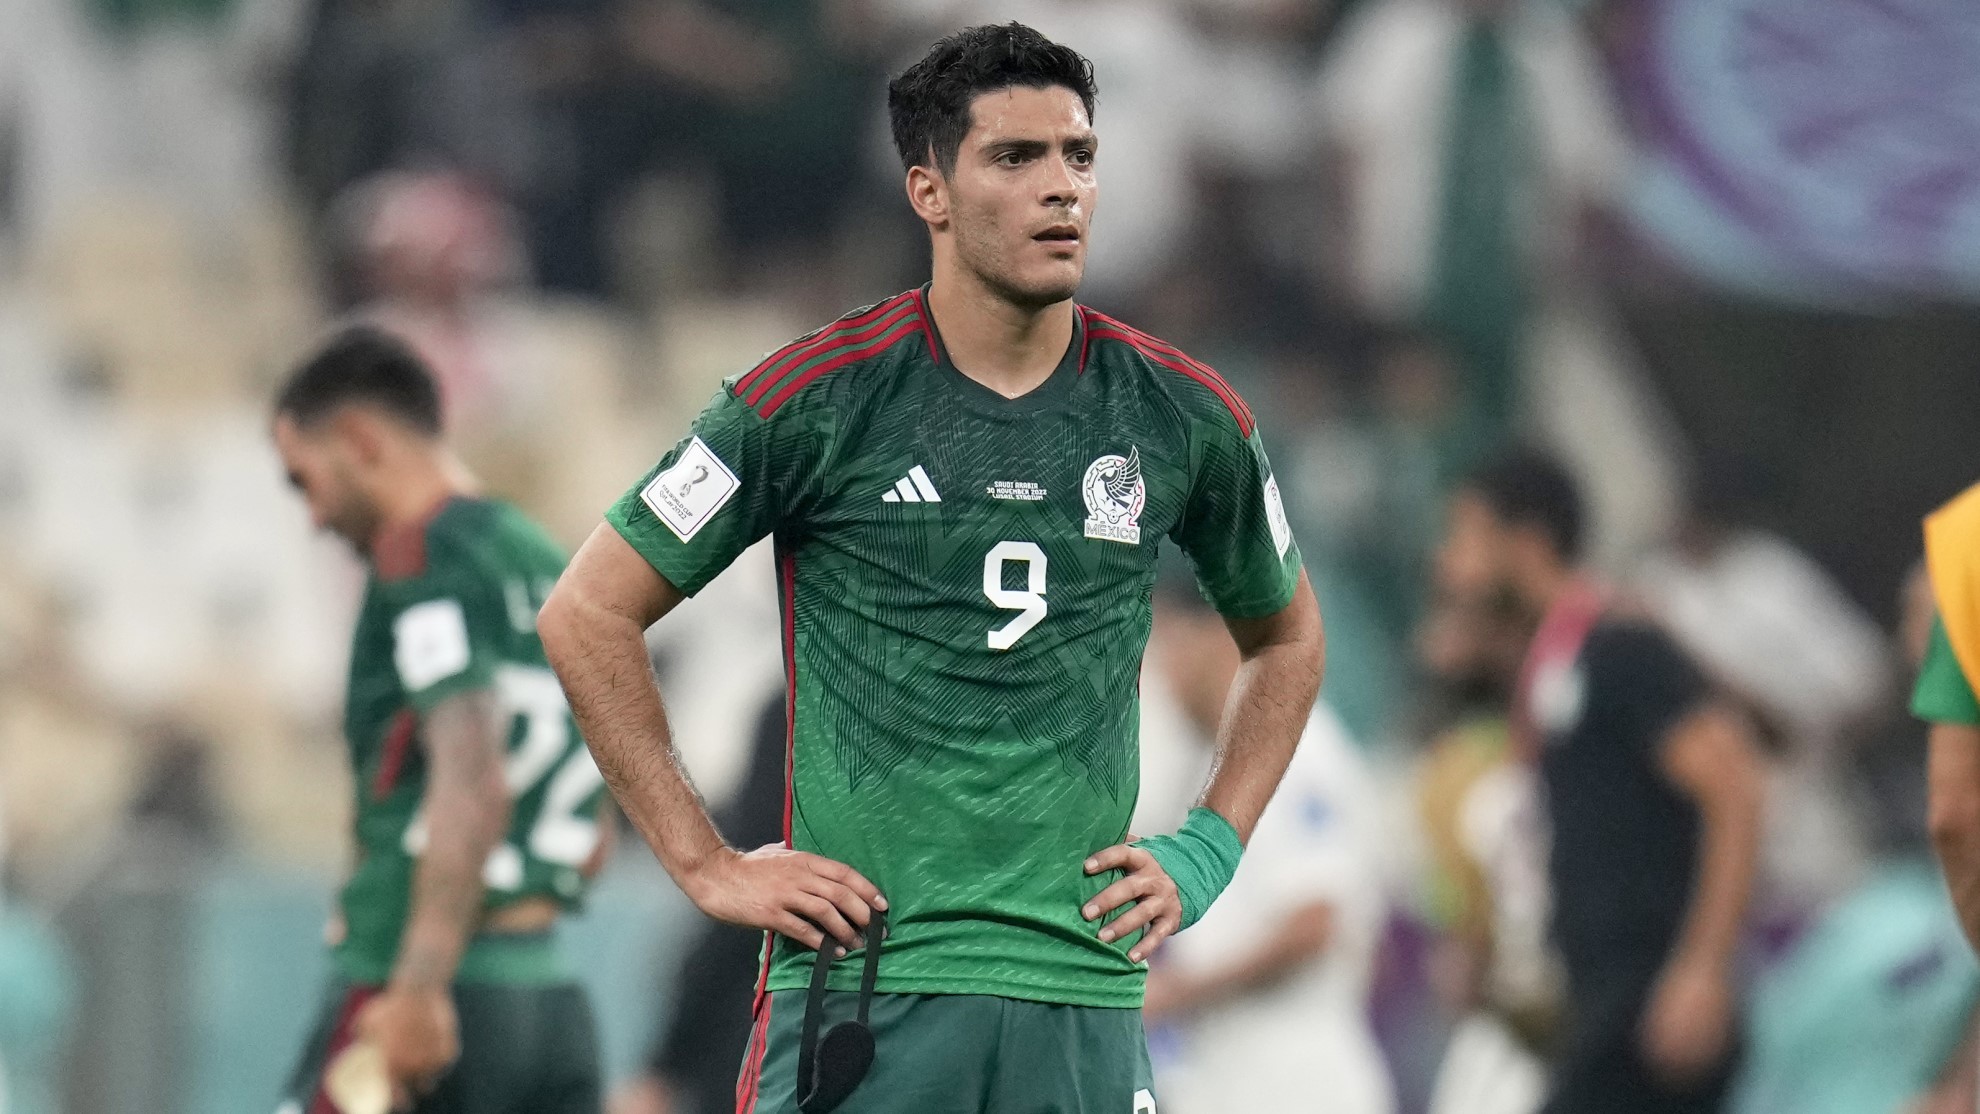 Primera Camiseta Arabia Saudita Jugador Al Owais 2022